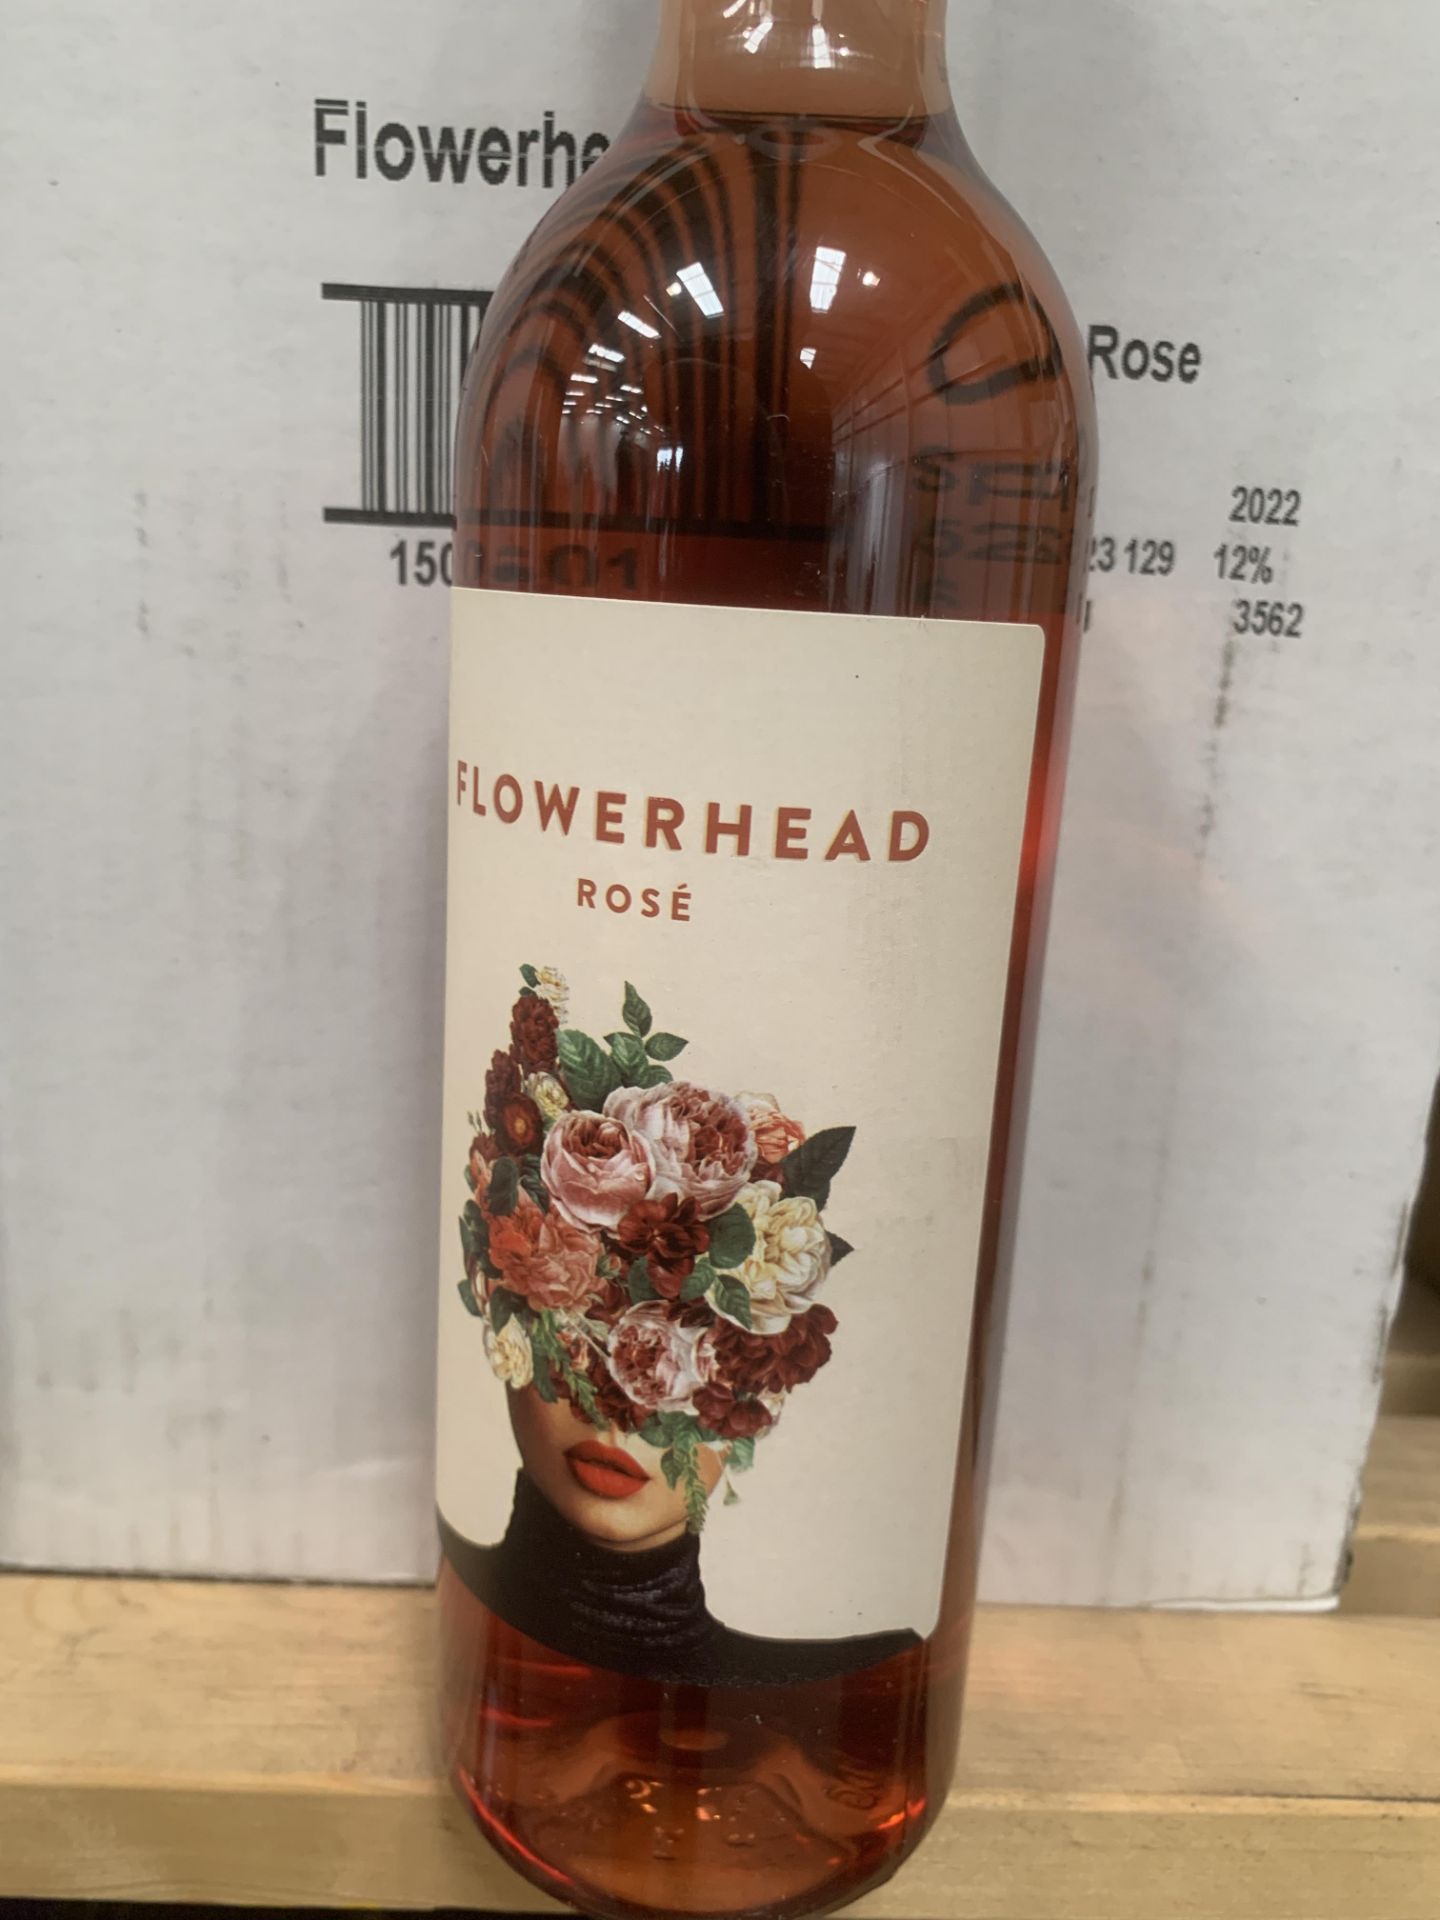 36x Bottles of Flower Head 'Garnacha Rose' 2022 - 12%, 75cl - Image 3 of 3